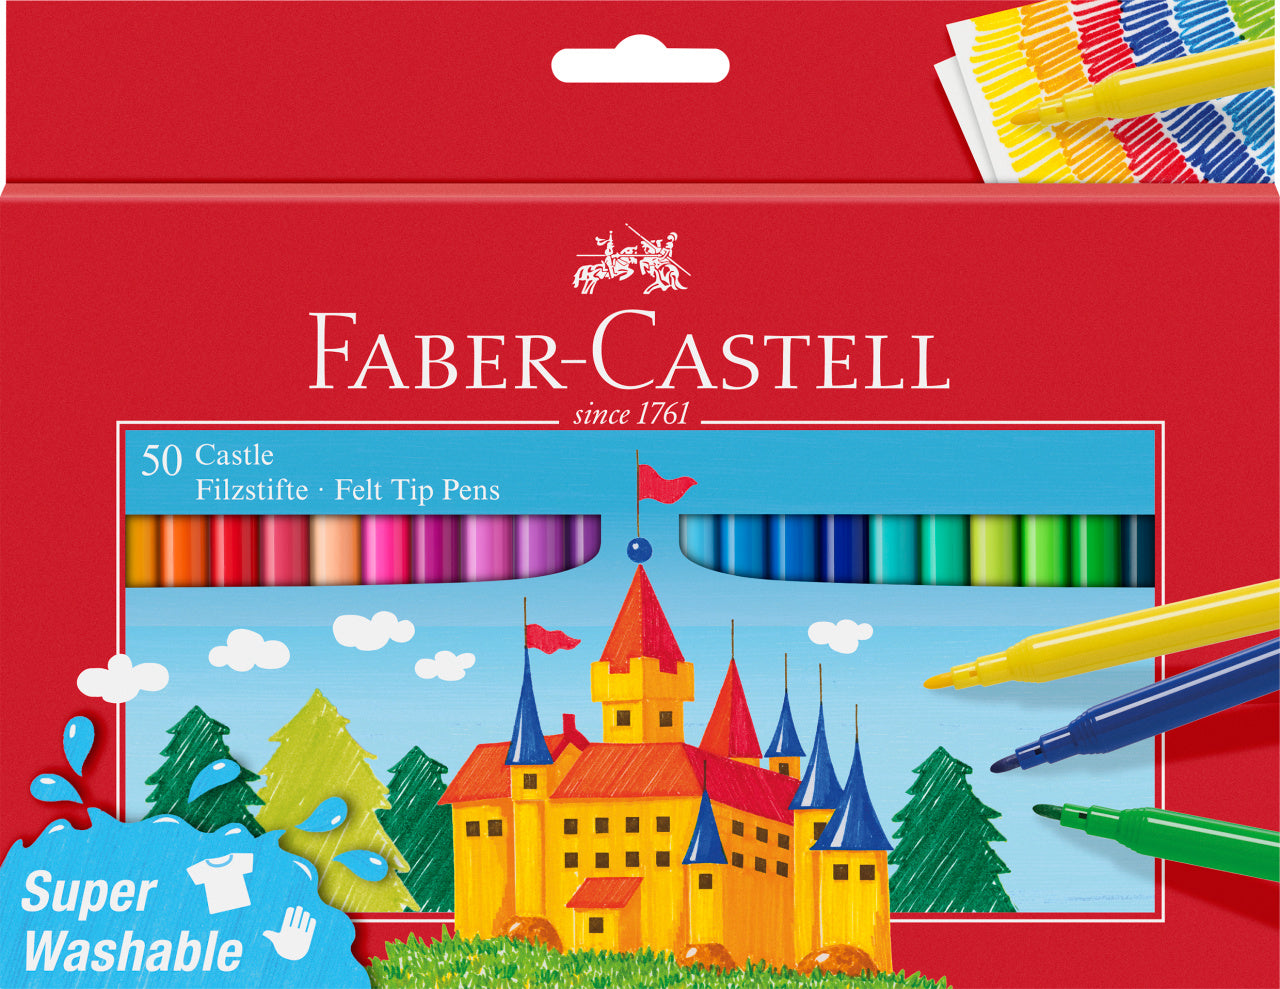 50 Tusser, Faber-Castell